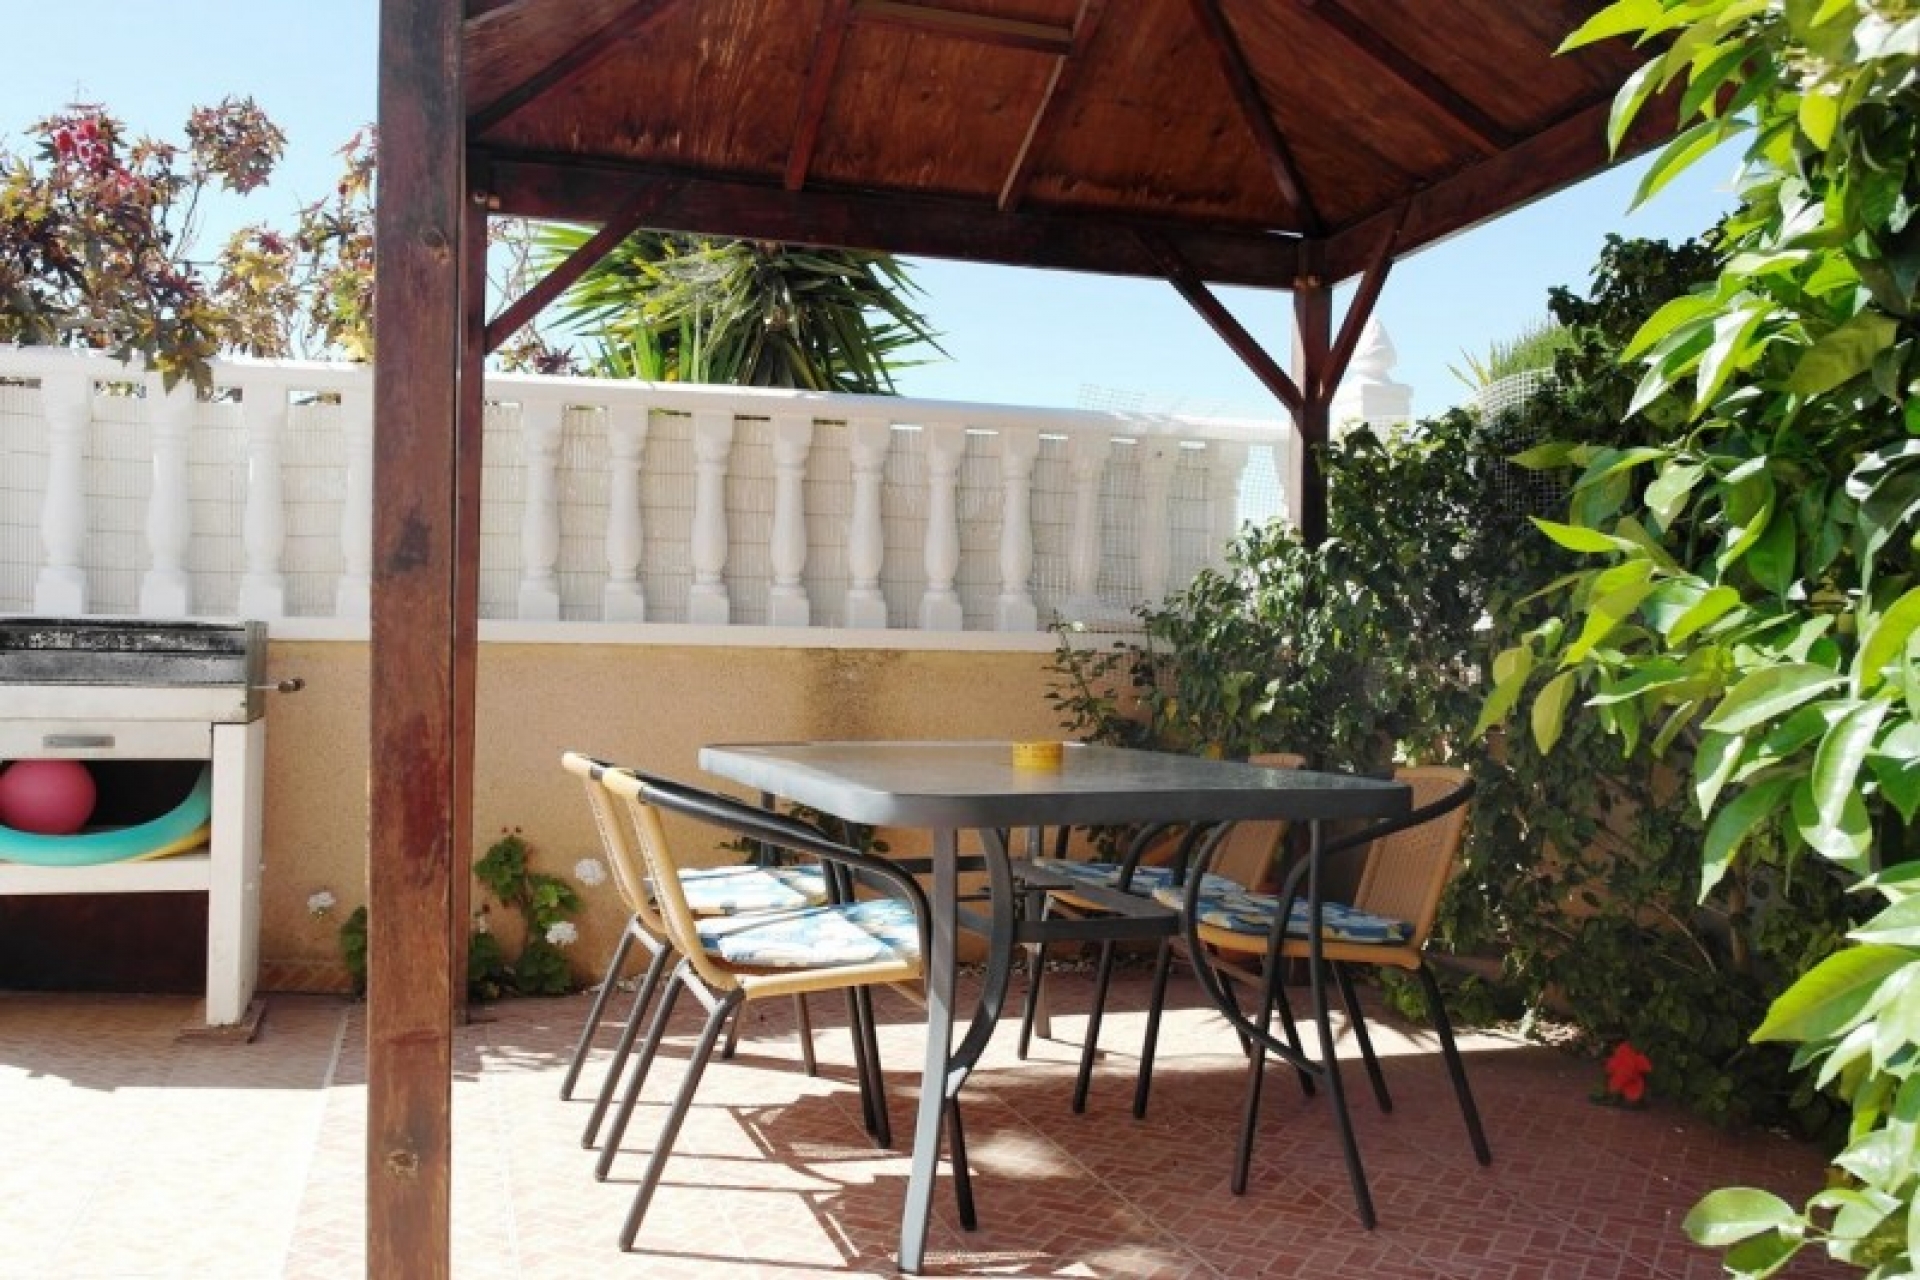 Cheap bargain property for sale in Playa Flamenca Costa Blanca Spain